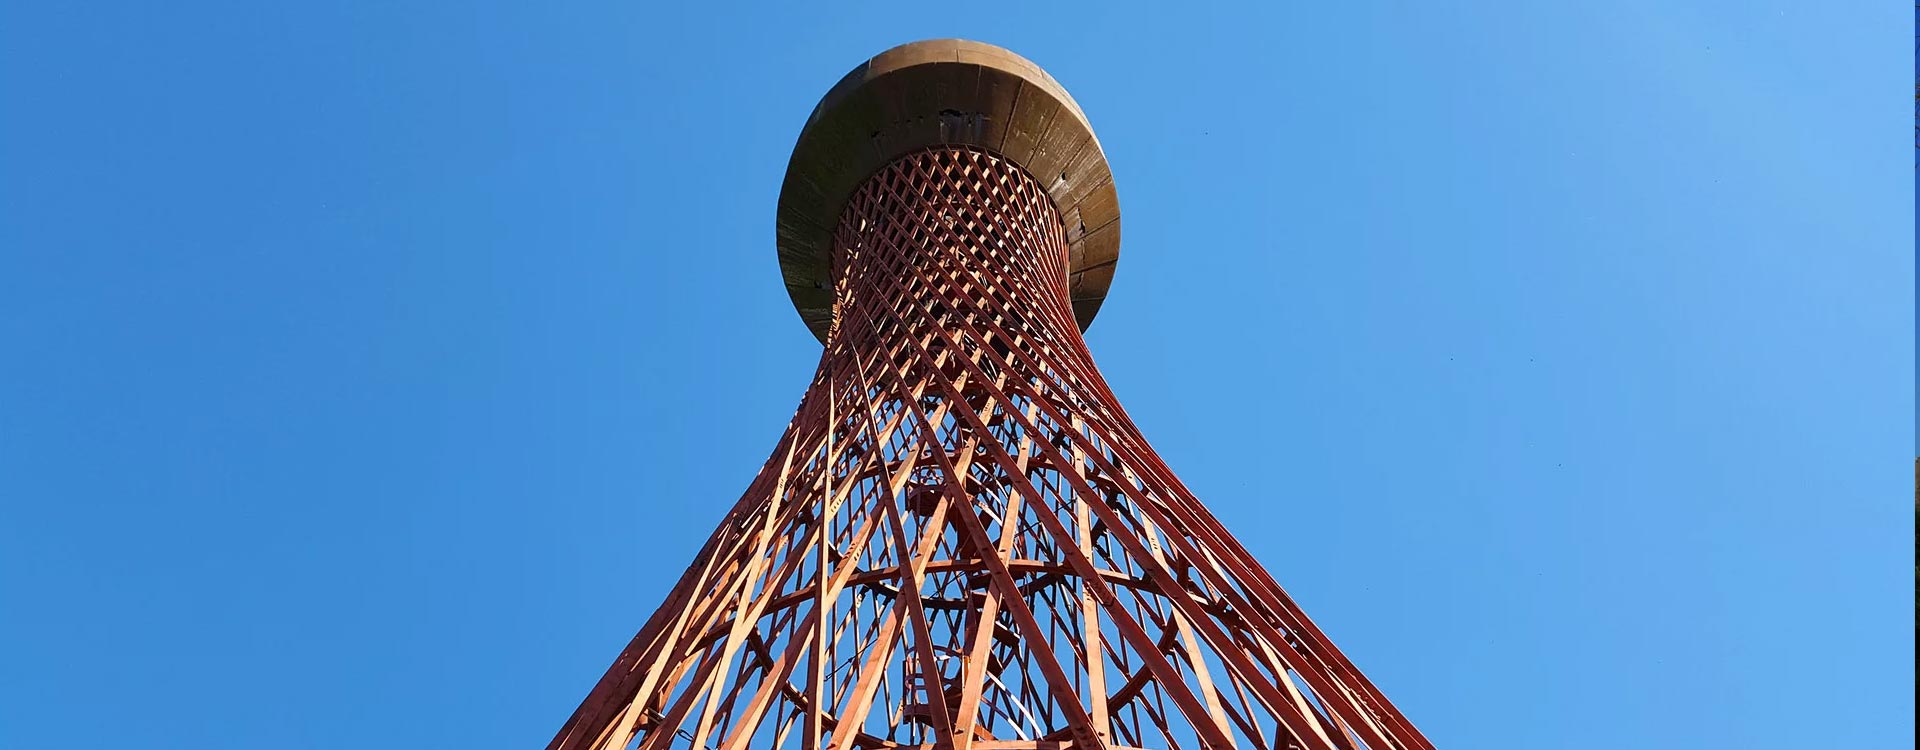 Climb The Sukhov Observation Tower